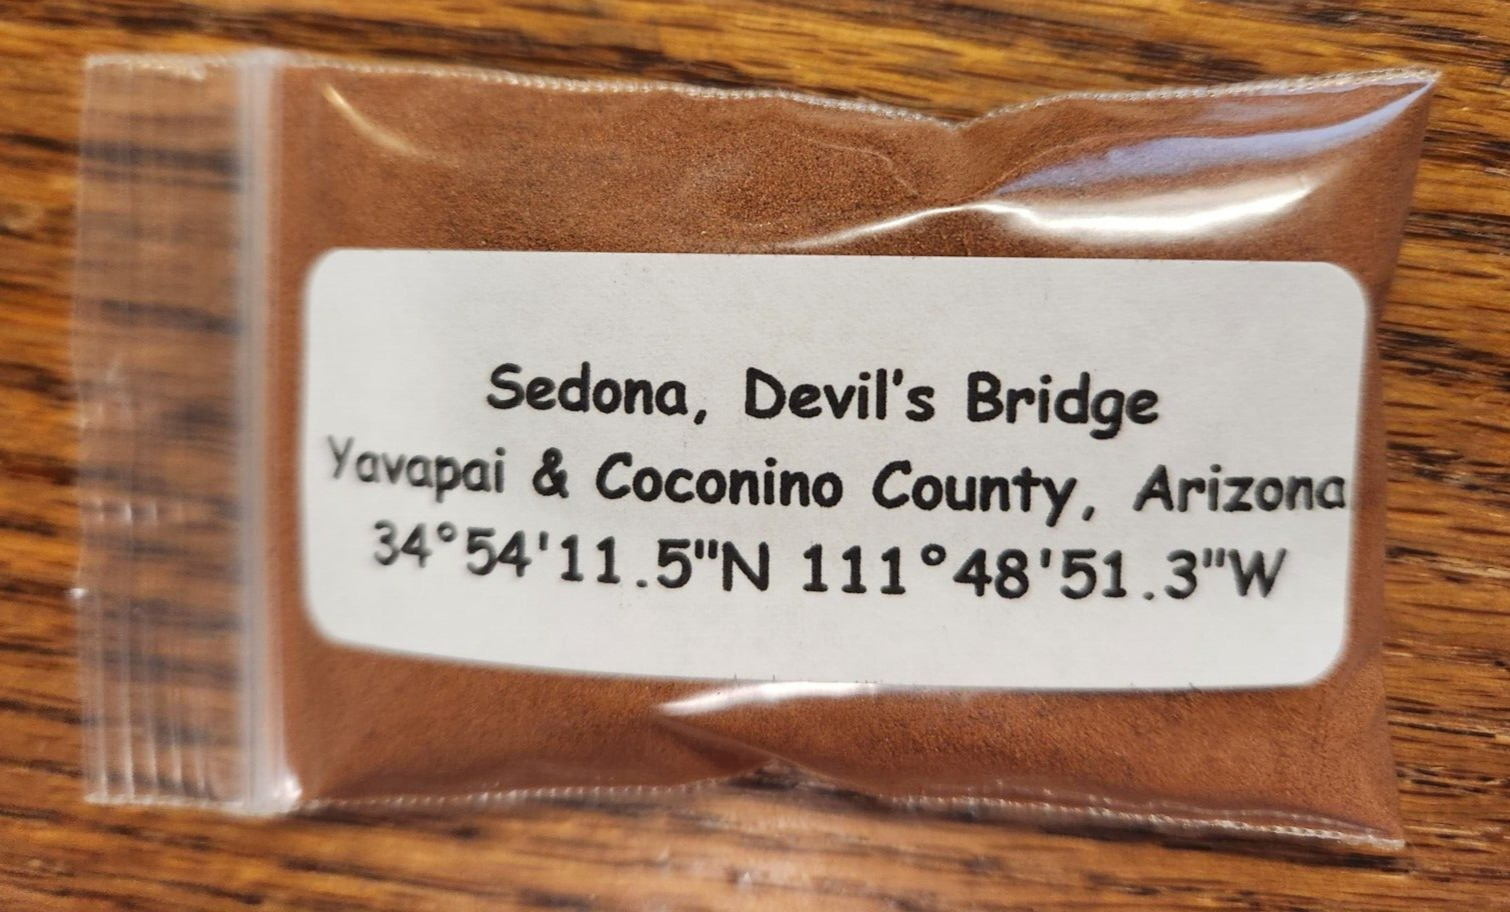 Sedona Devil's Bridge Sand Soil Dirt Sample Yavapai Coconino Arizona Apx. 30ml.